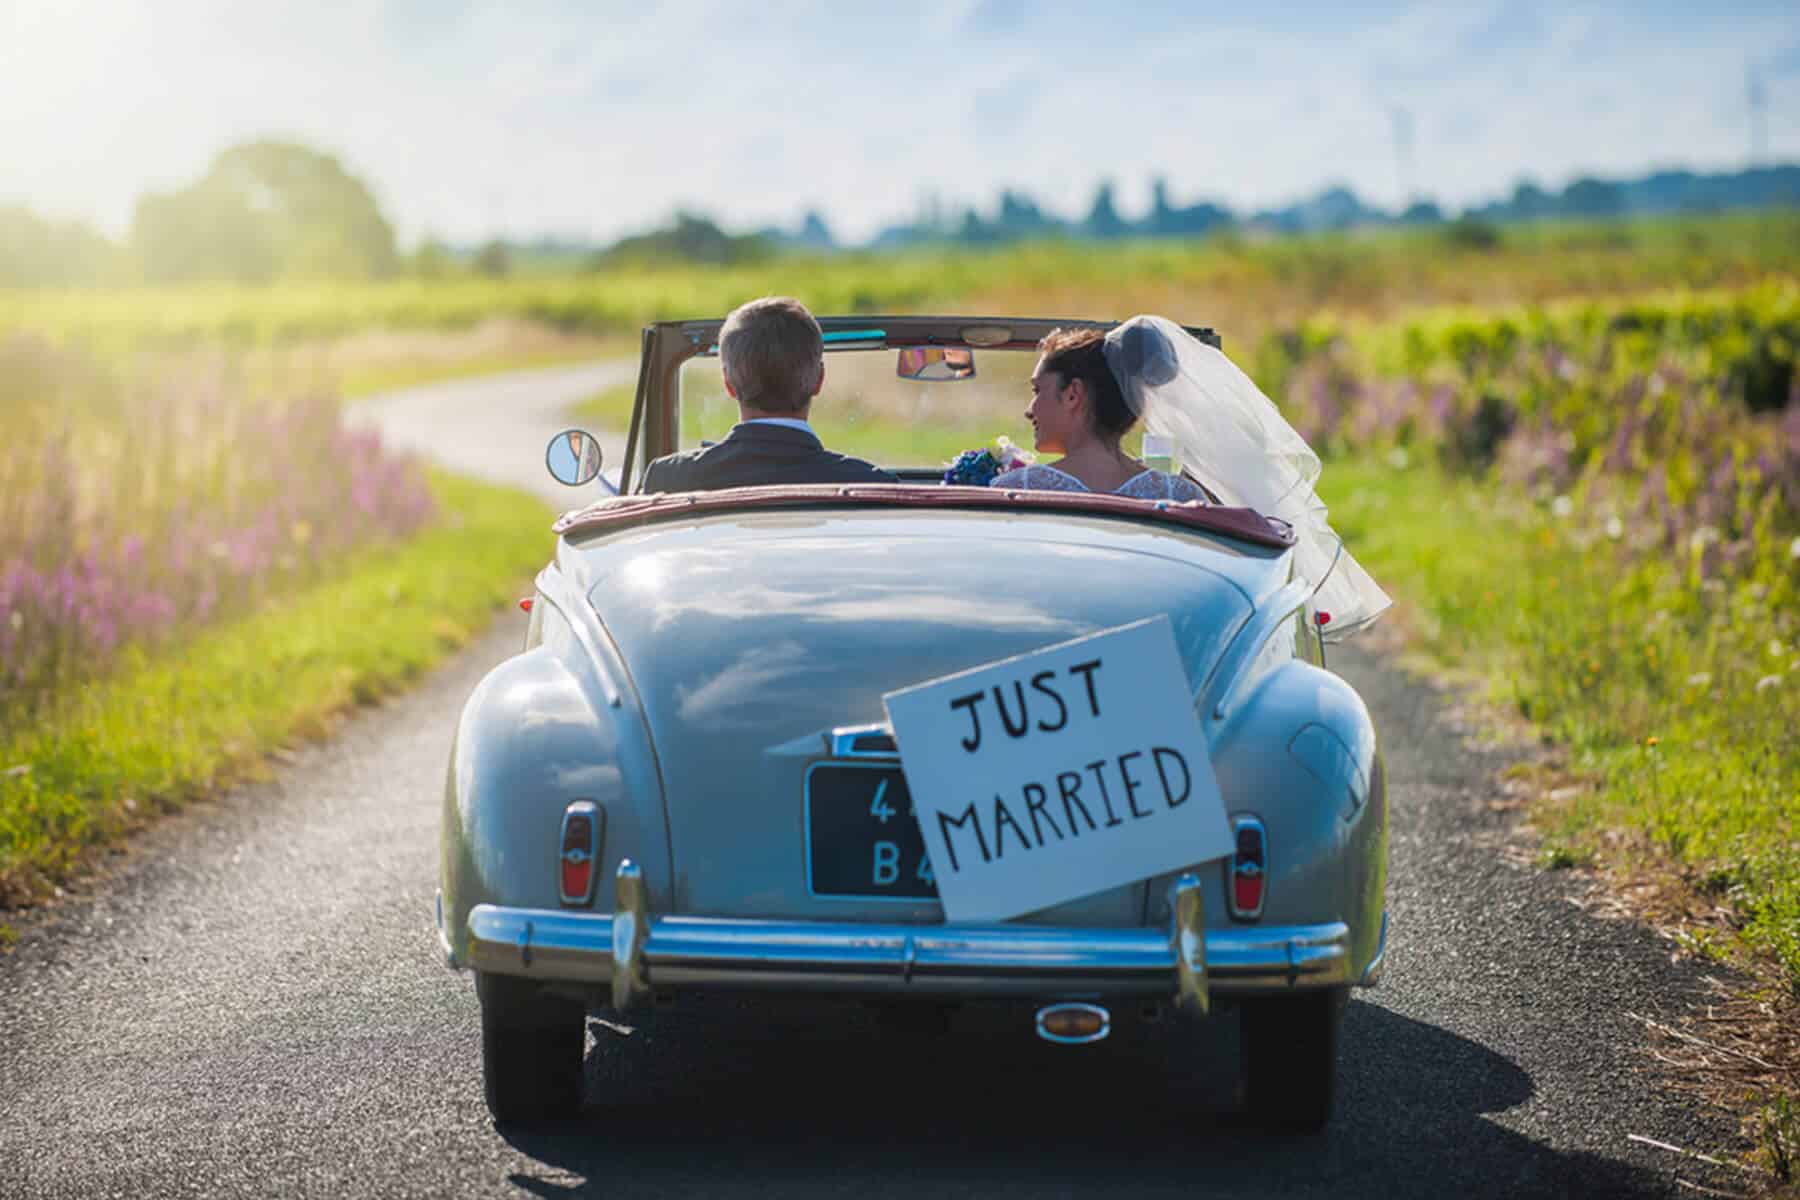 Just-married-wedding-car